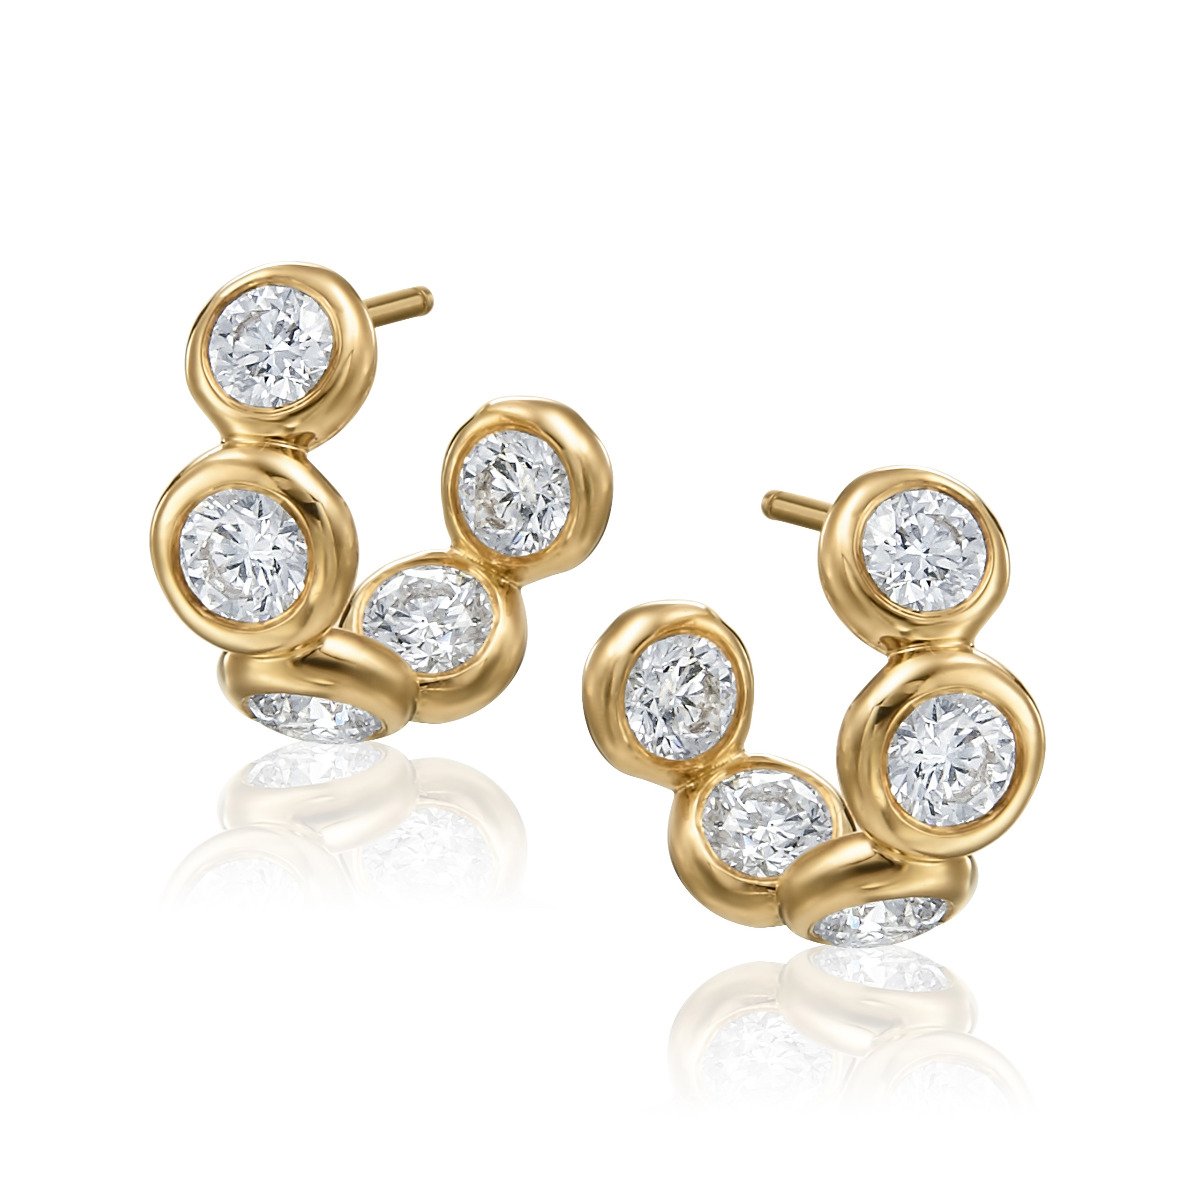 Gumuchian "Moonlight" C-Curved Diamond Earrings